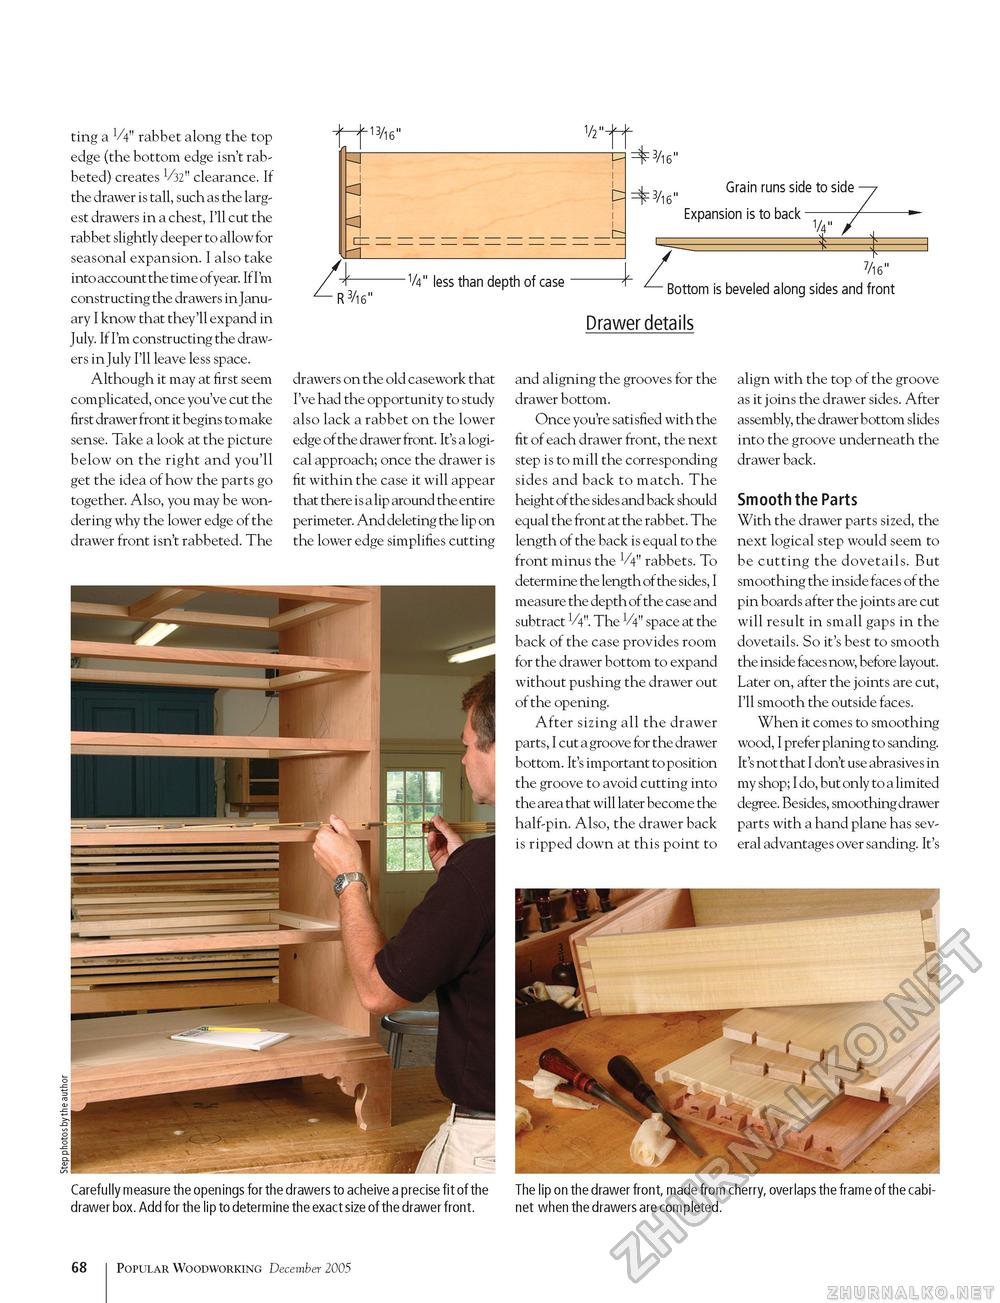 Popular Woodworking 2005-12  152,  67